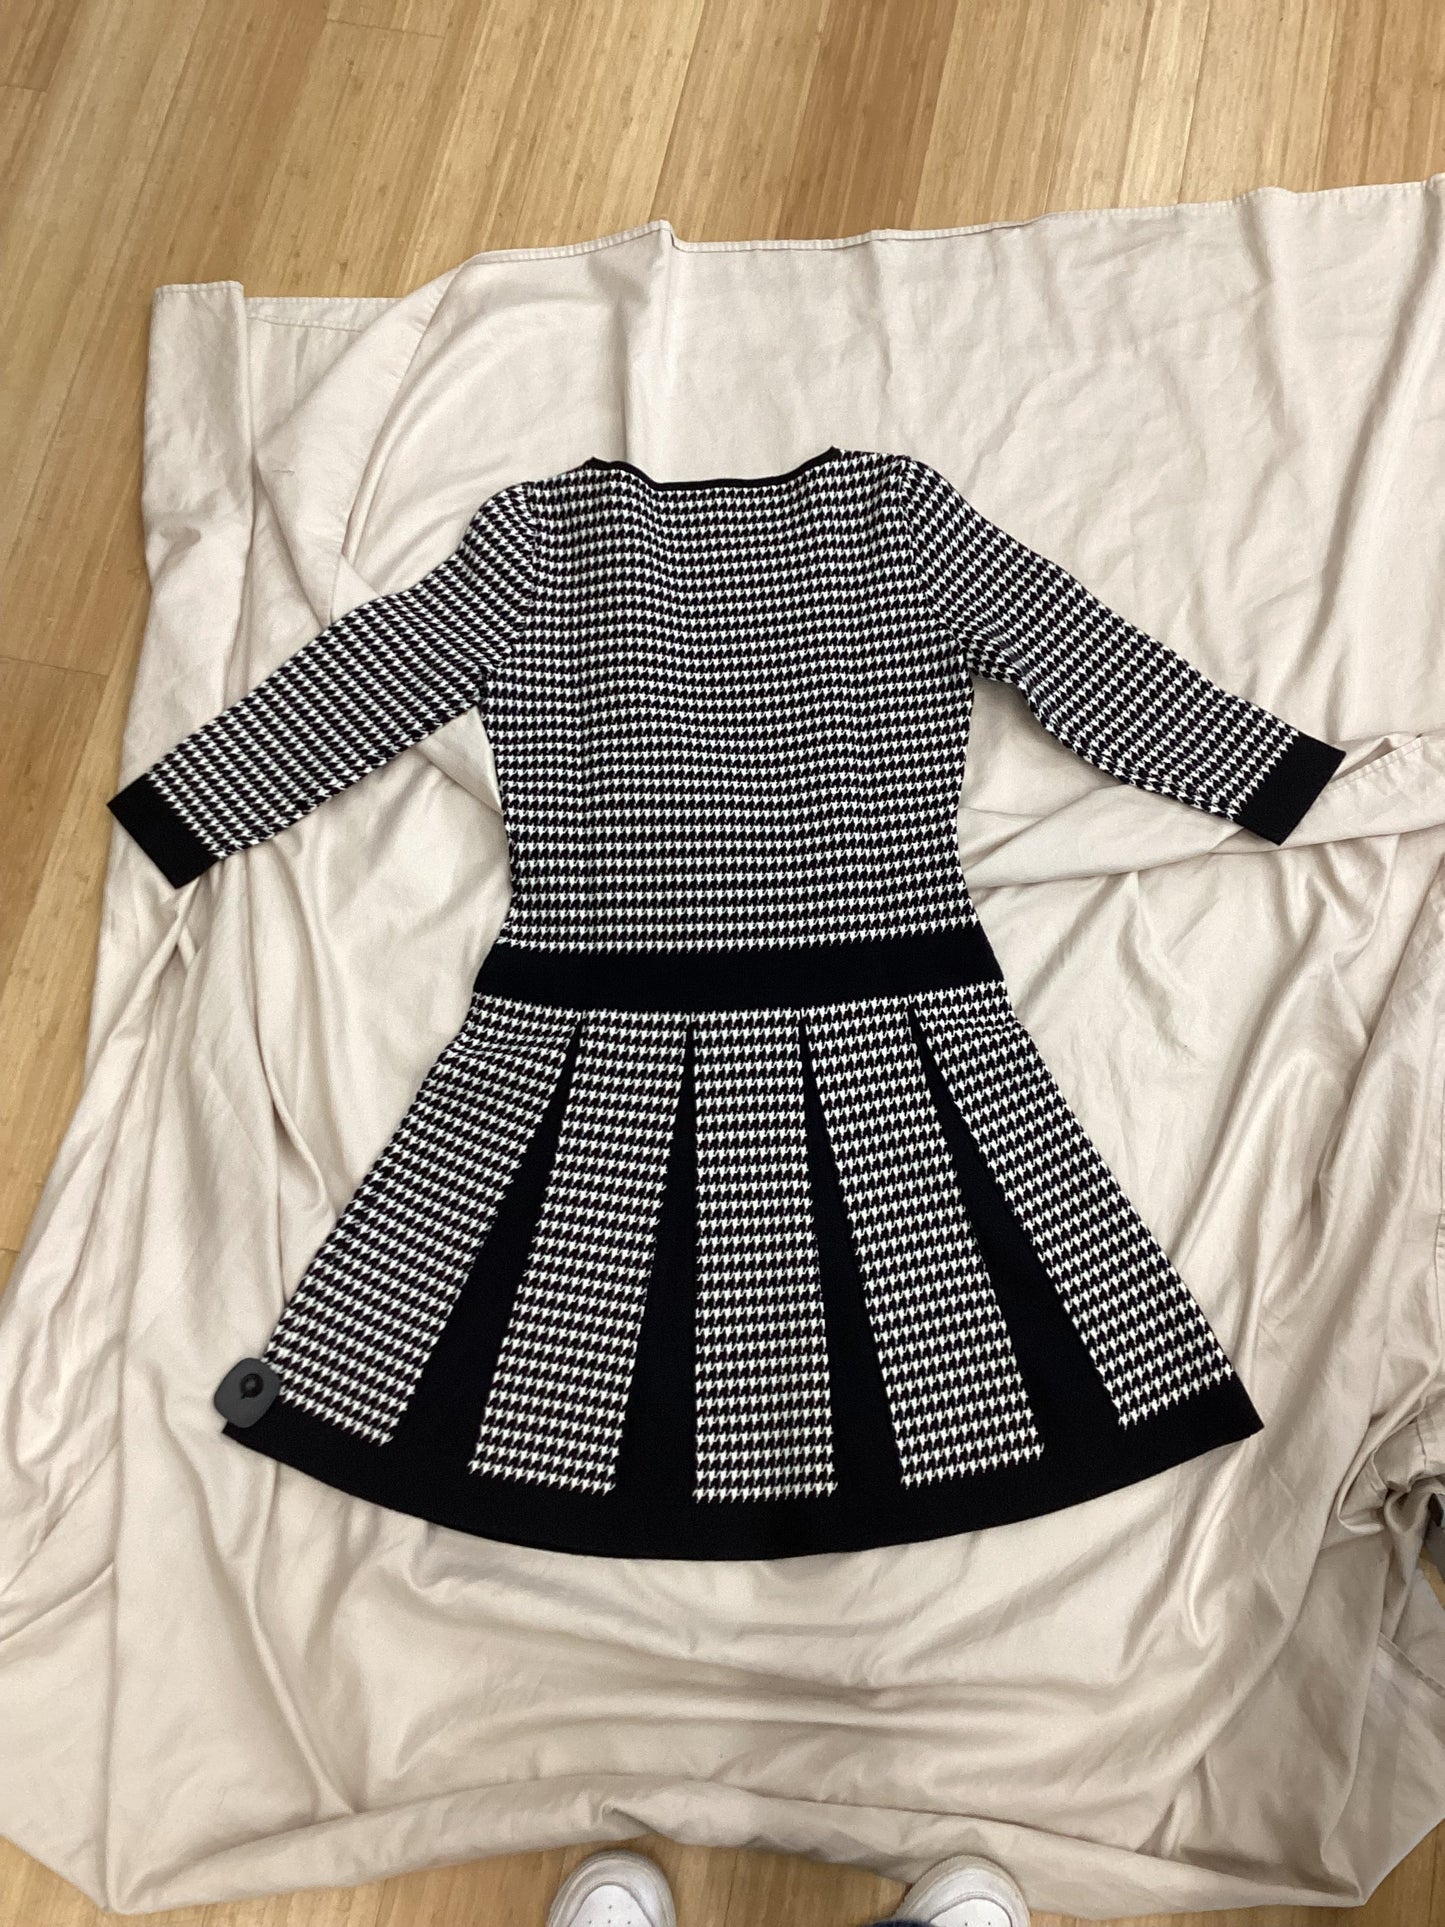 Checkered Pattern Dress Designer Ralph Lauren, Size M